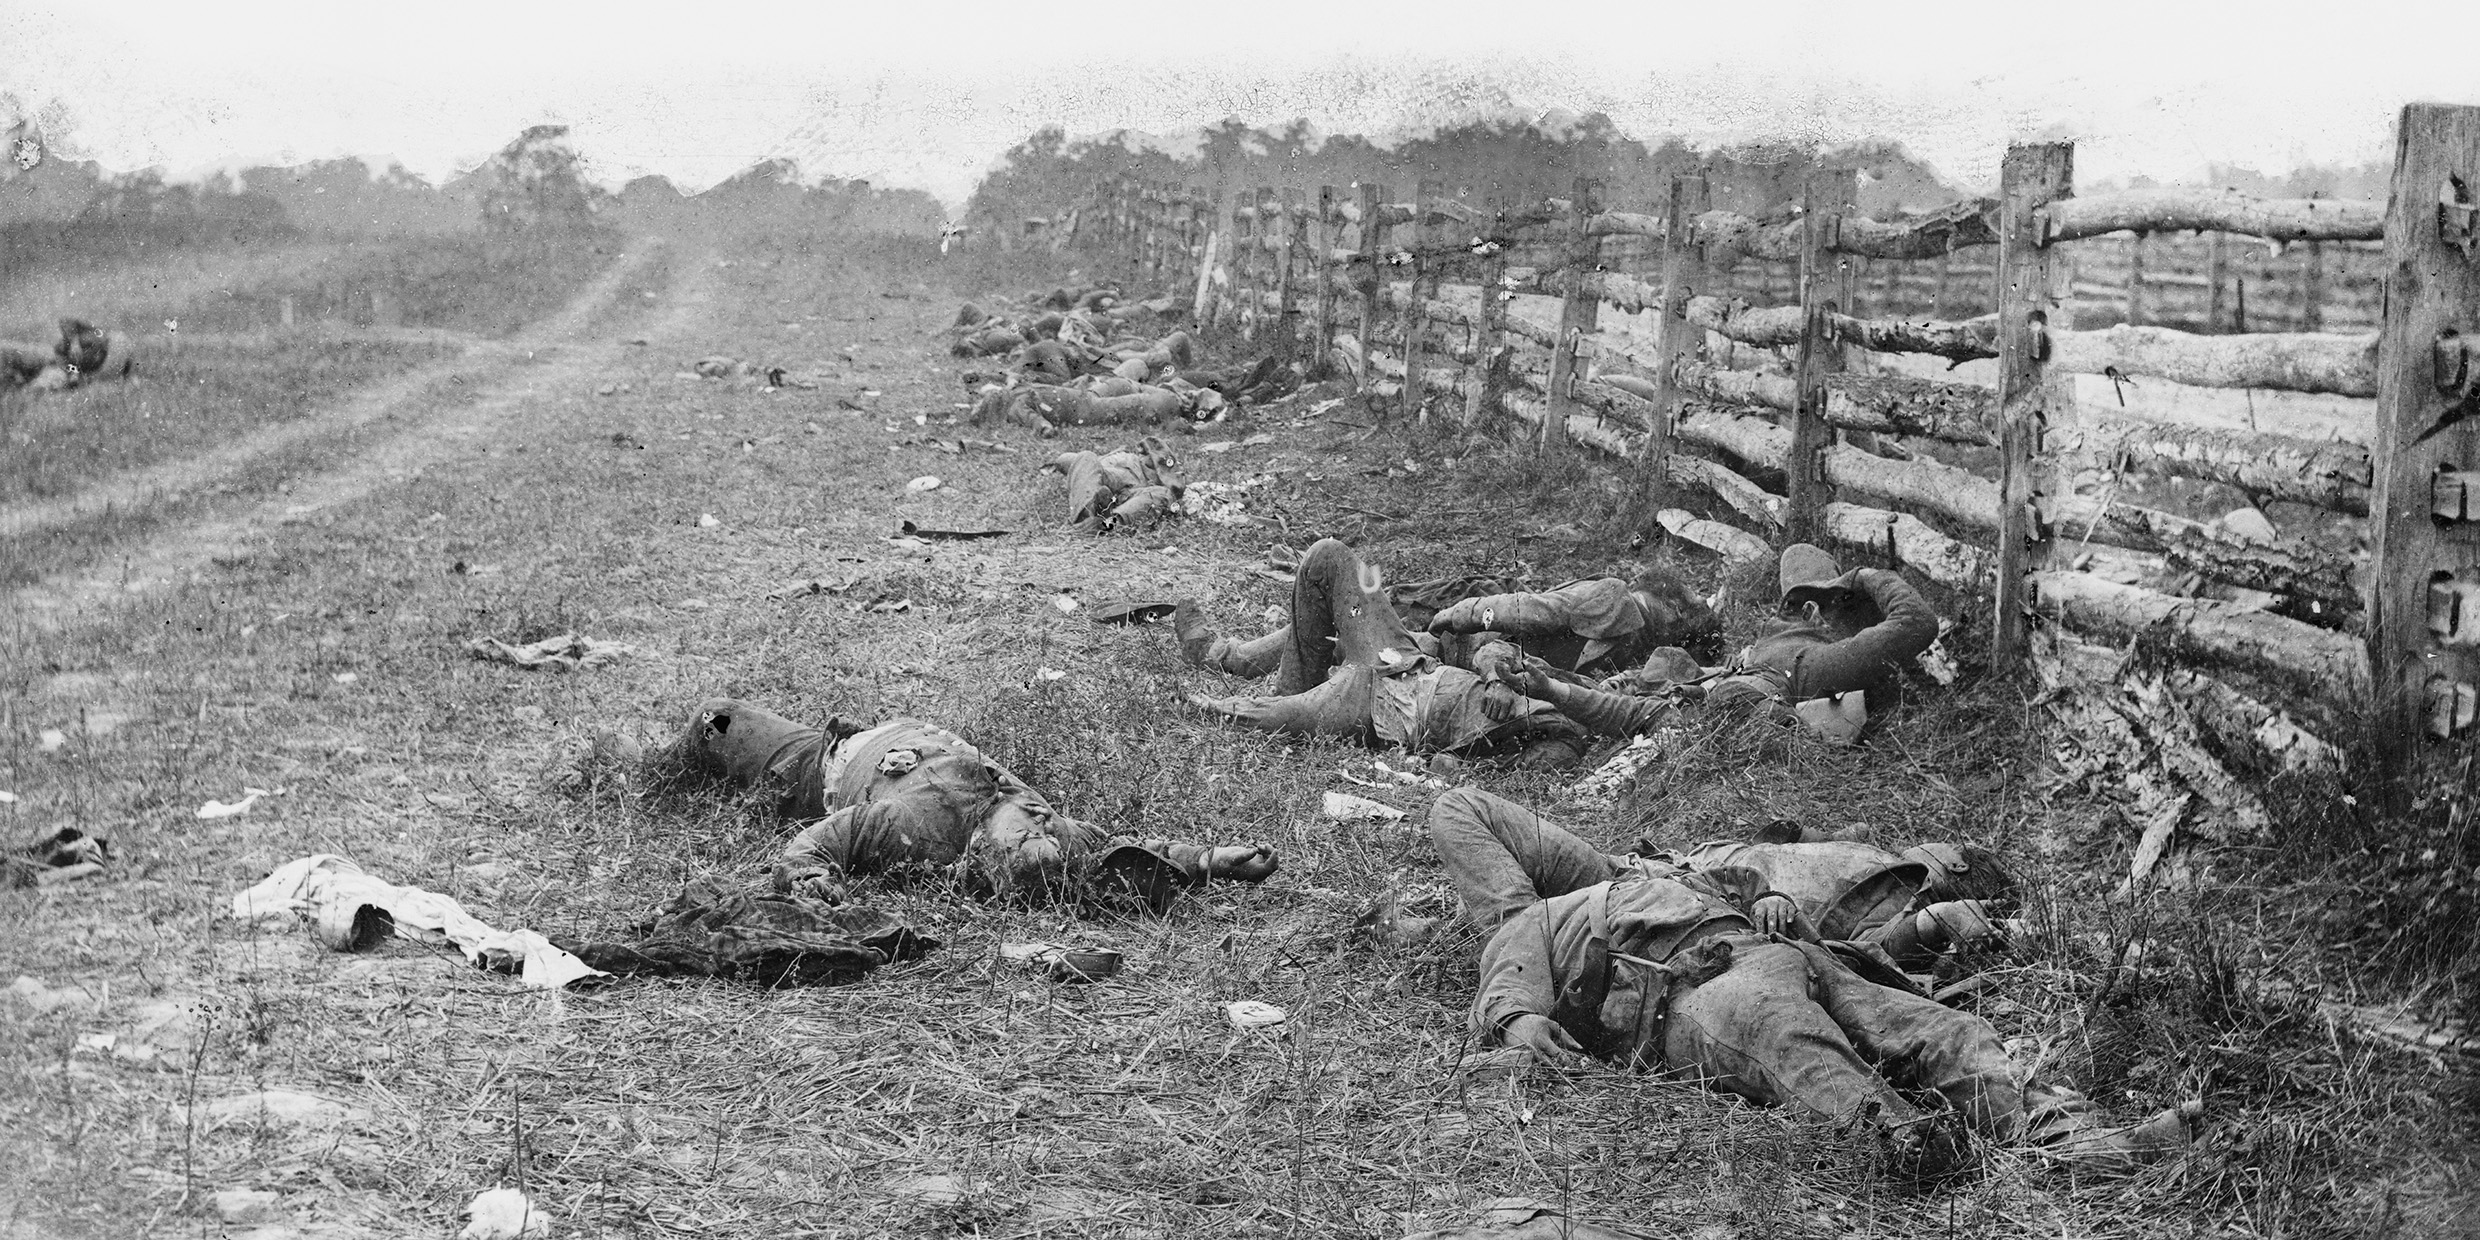 Image of Civil War battlefield